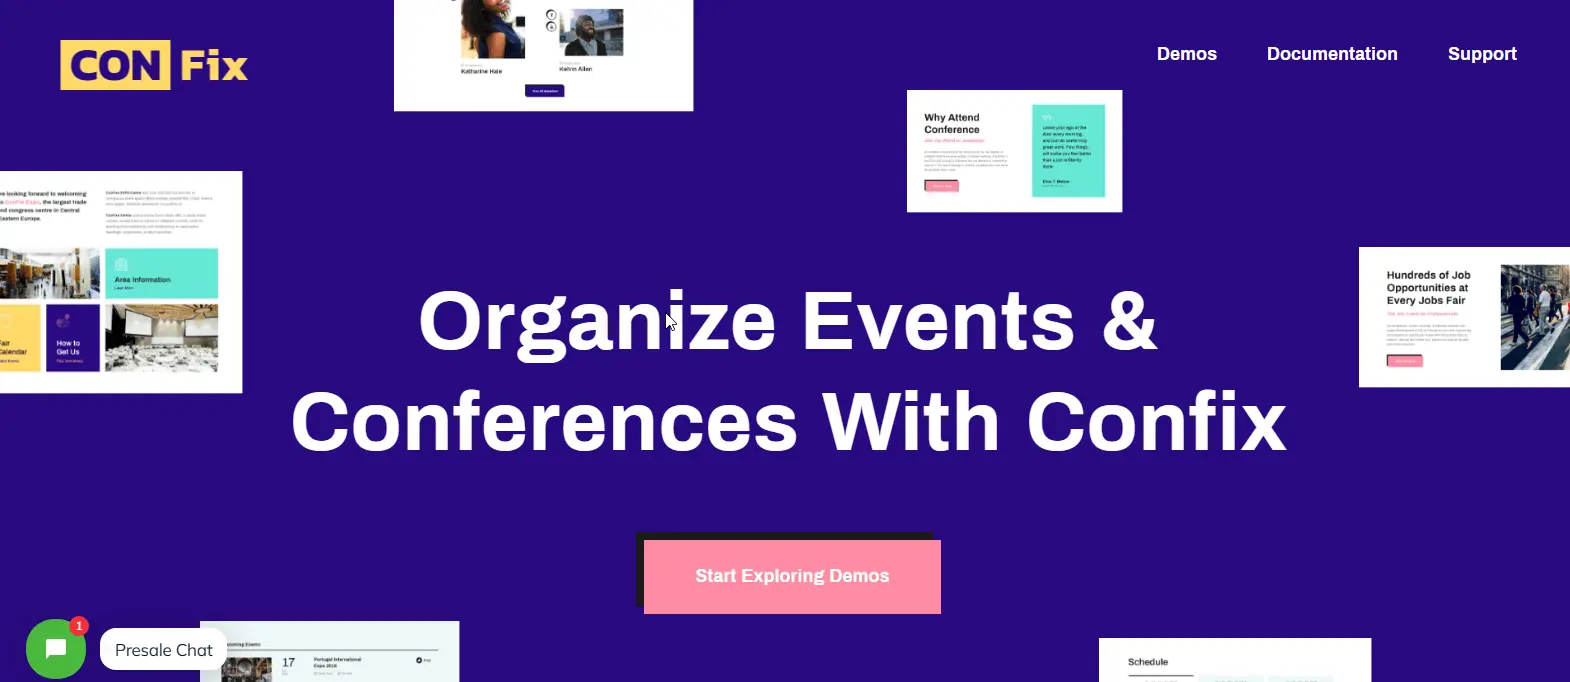 ConFix WordPress theme for Events Calendar